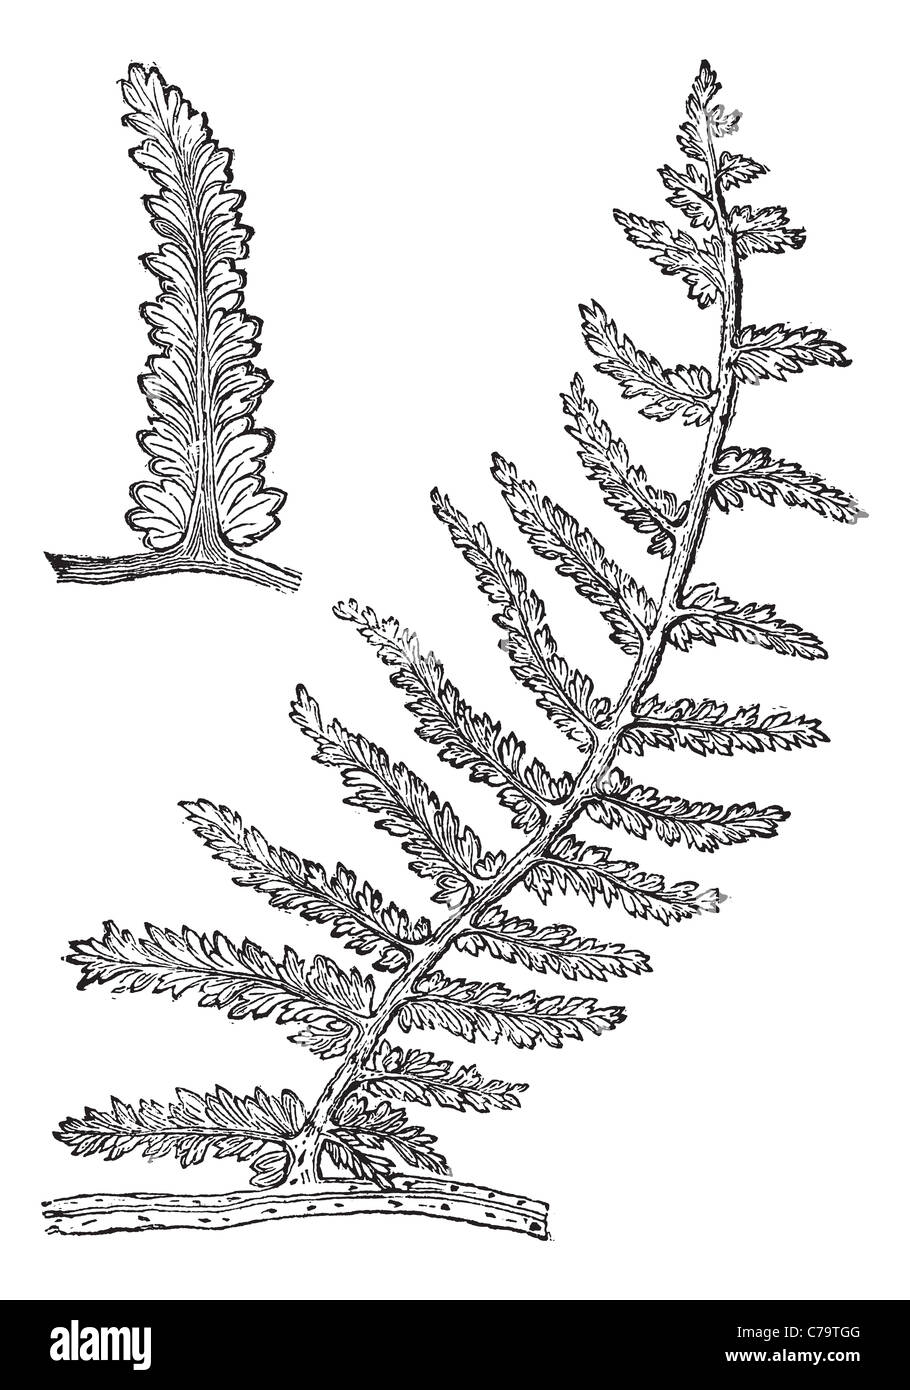 Sphenopteris, vintage engraving. Old engraved illustration of Sphenopteris, an extinct seed fern. Stock Photo